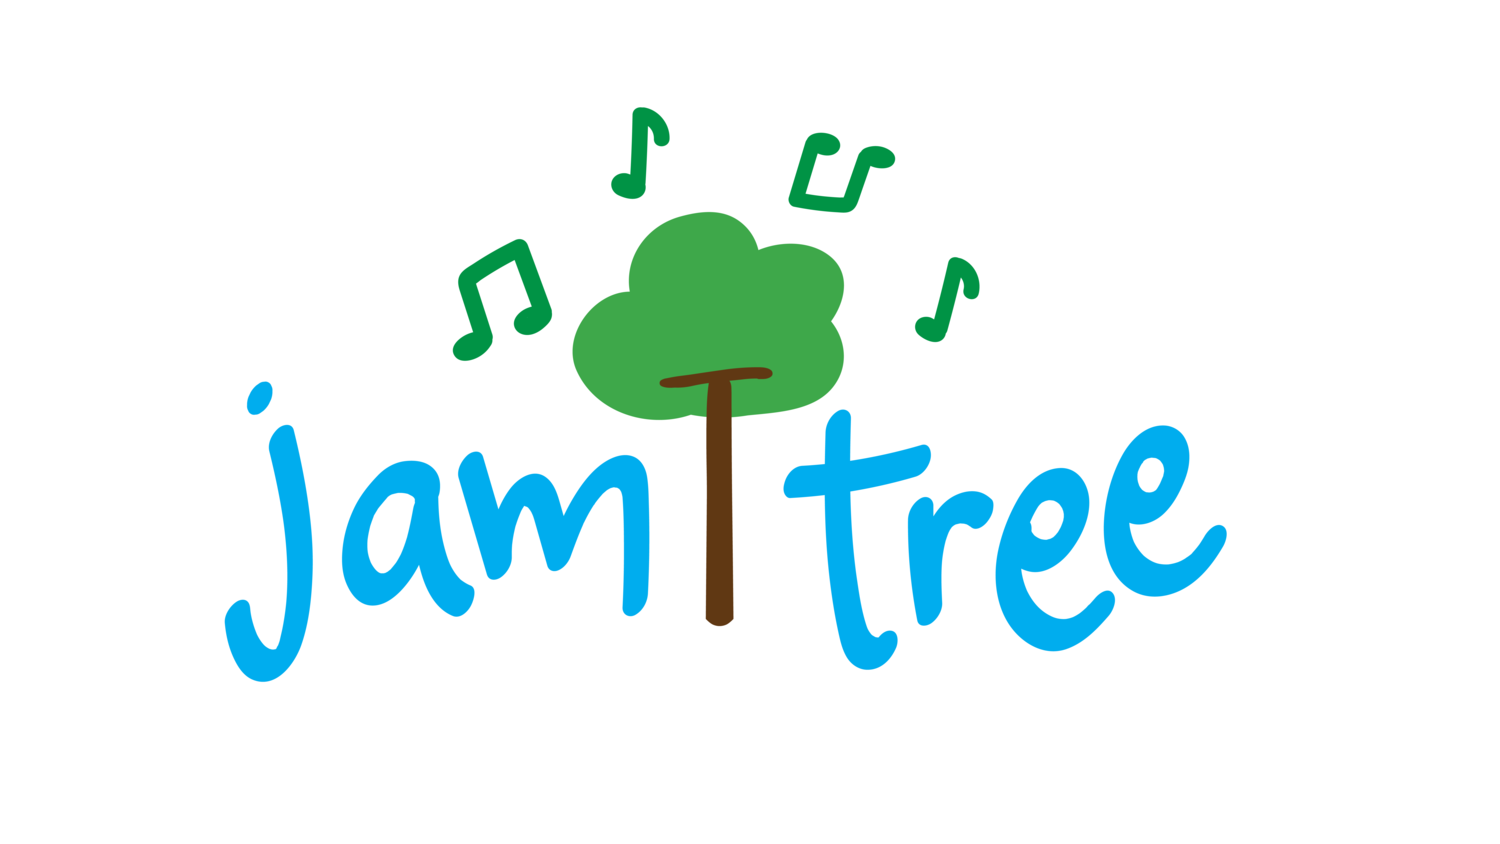 Tree . Clipart piano jam session